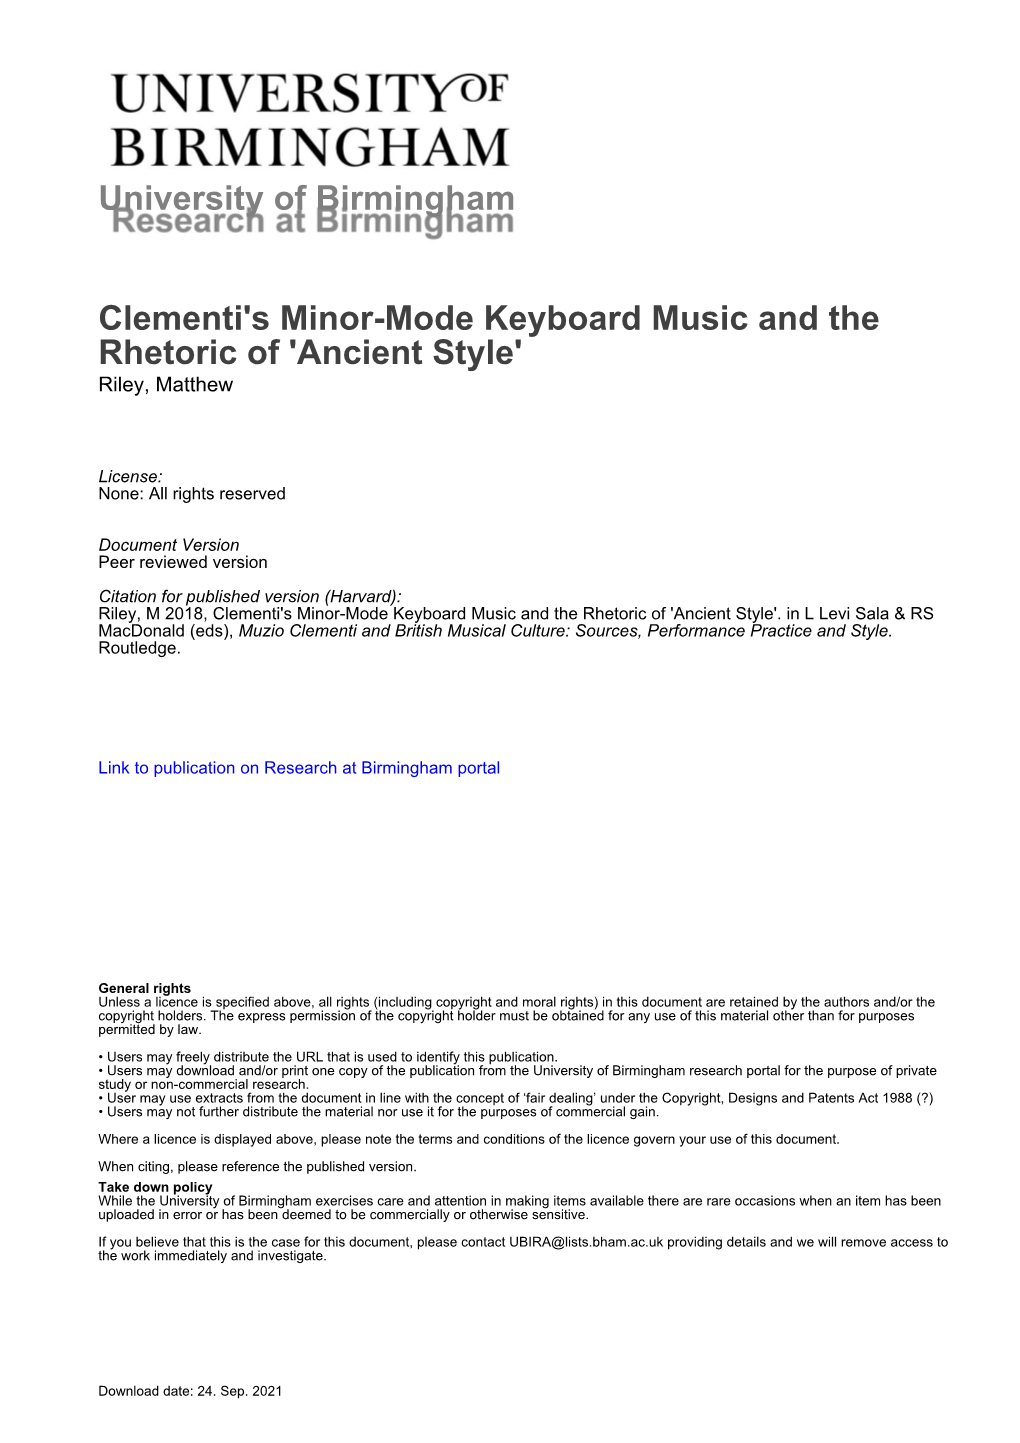 University of Birmingham Clementi's Minor-Mode Keyboard